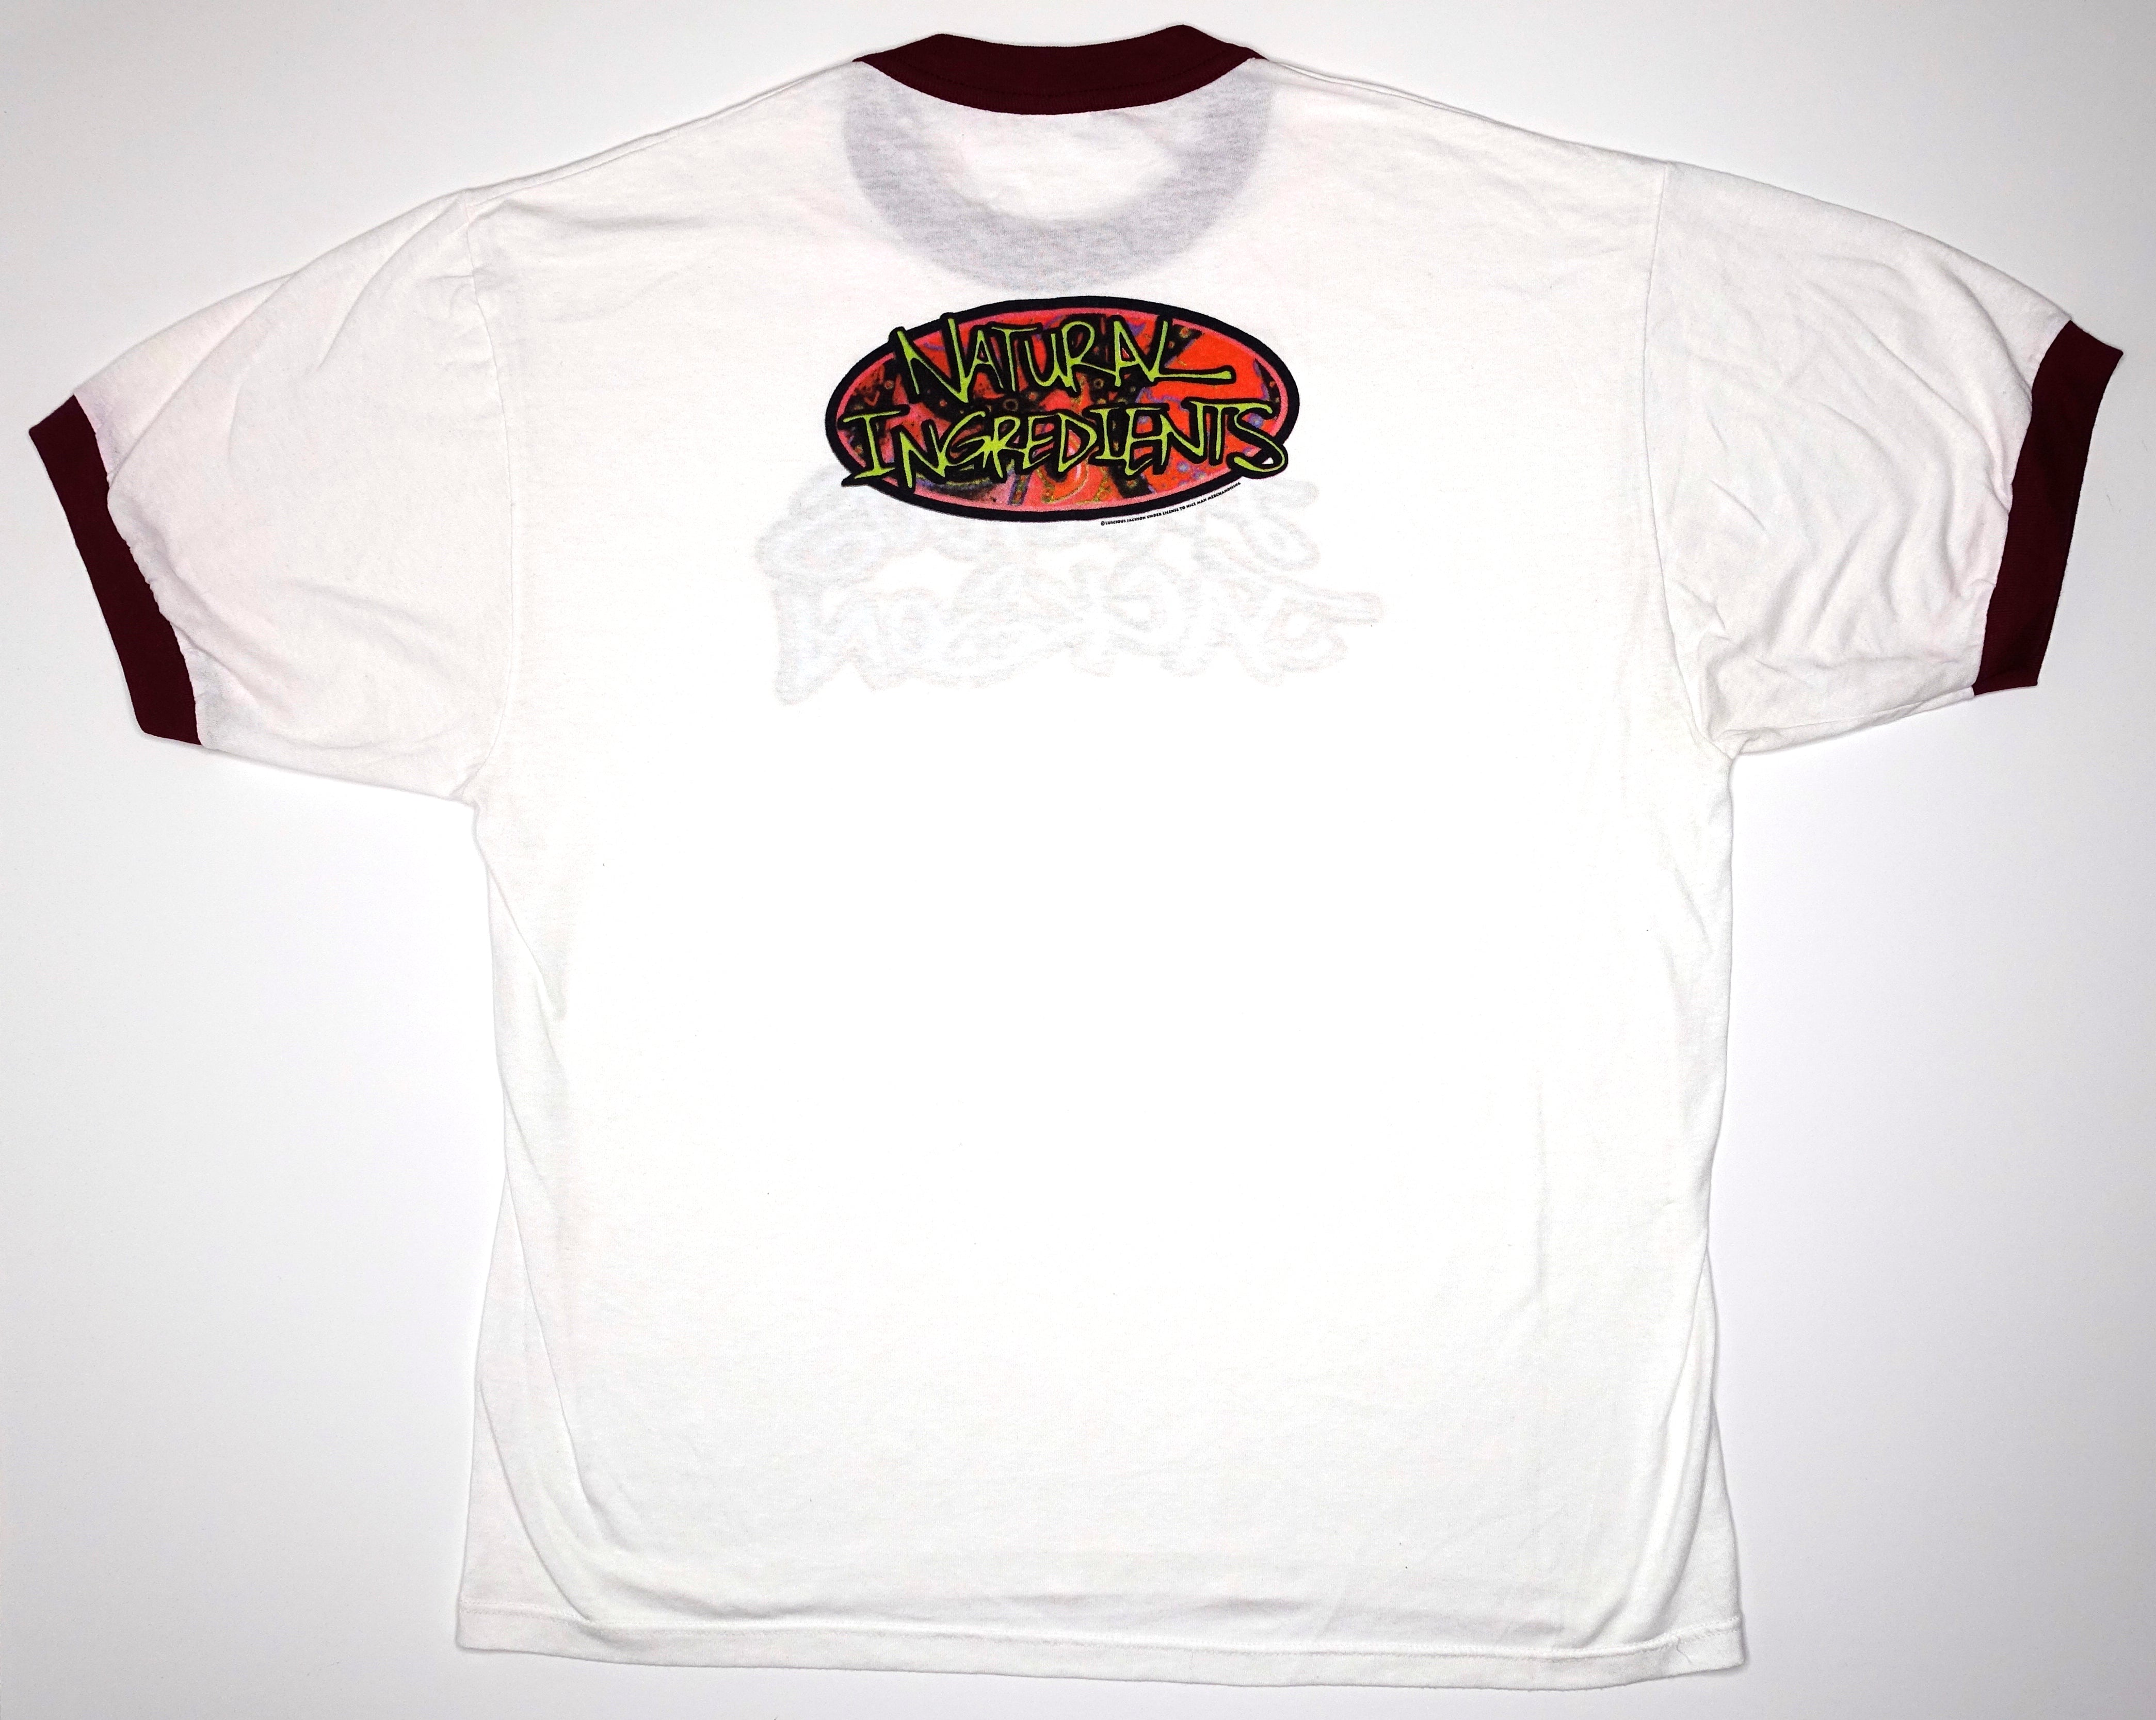 Luscious Jackson -  Natural Ingredients 1994 Tour Shirt Size XL